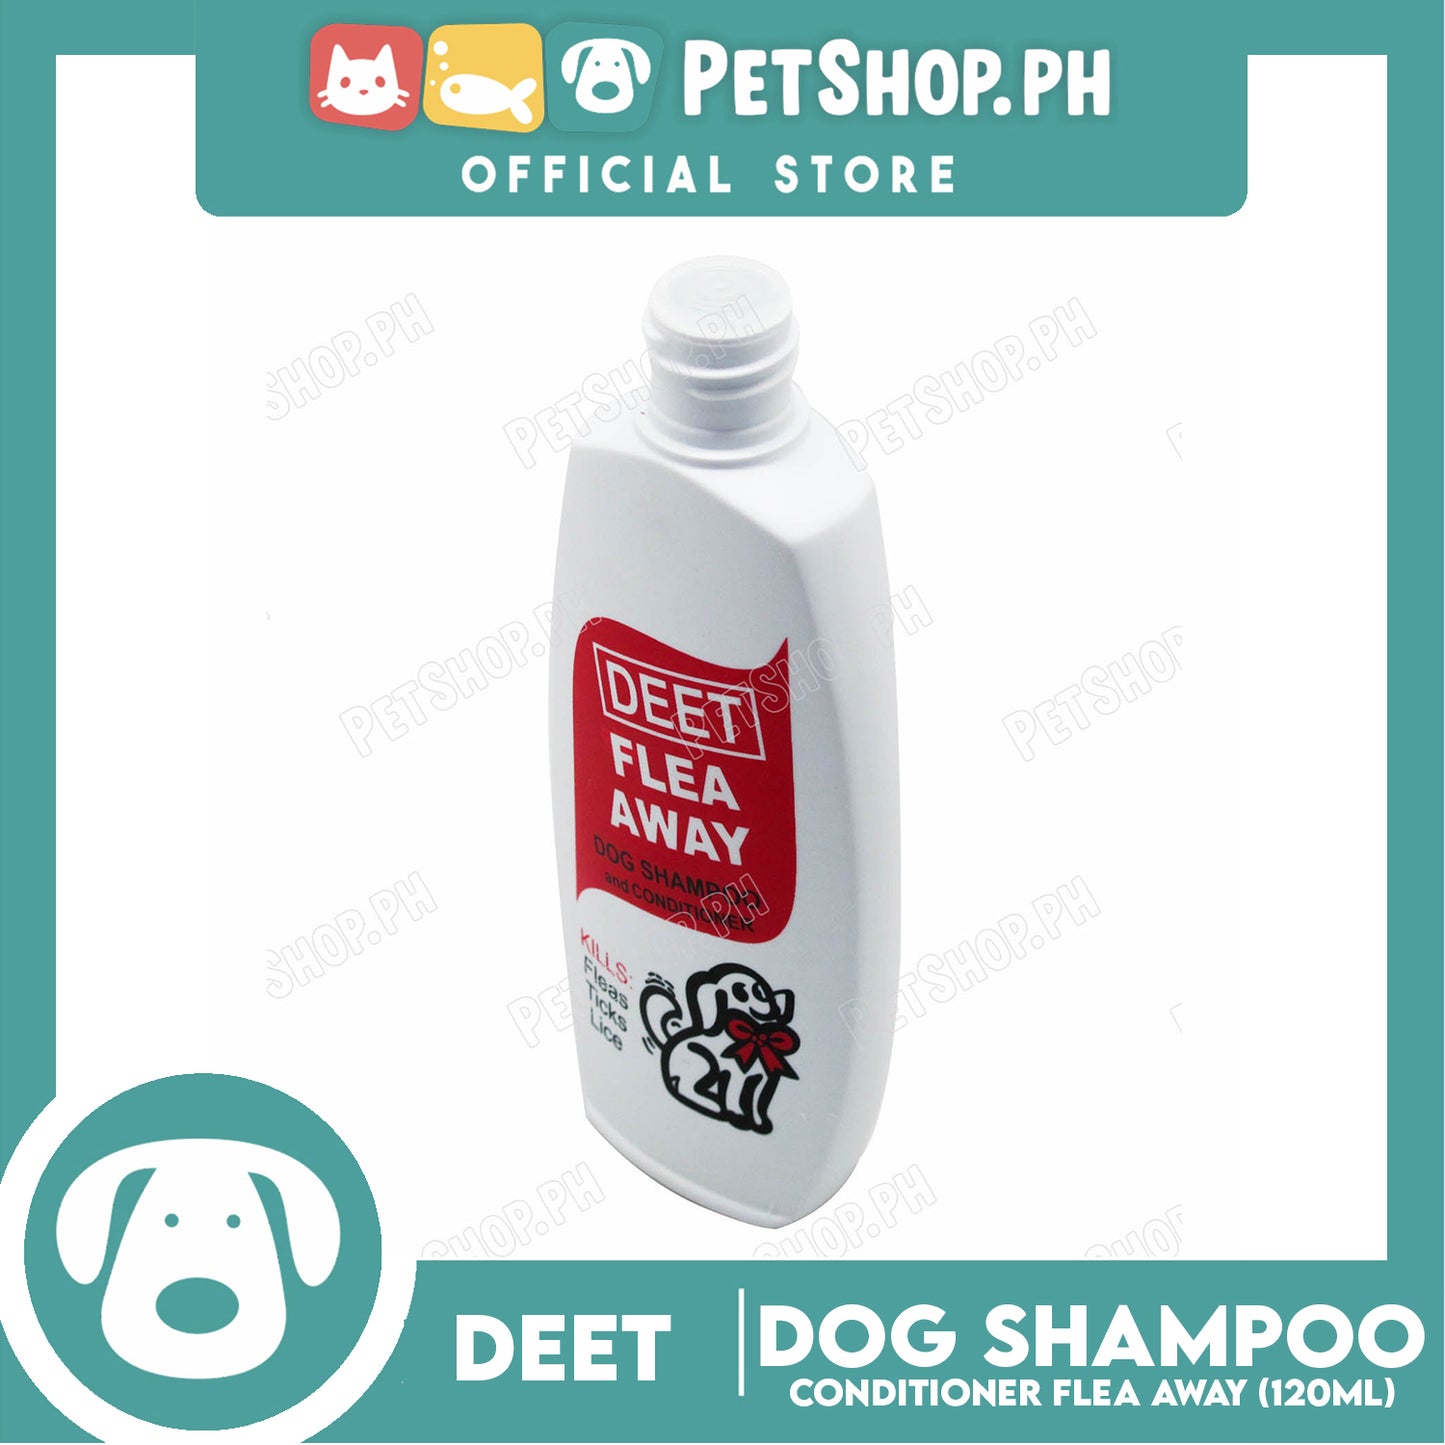 Deet Flea Away Dog Shampoo and Conditioner